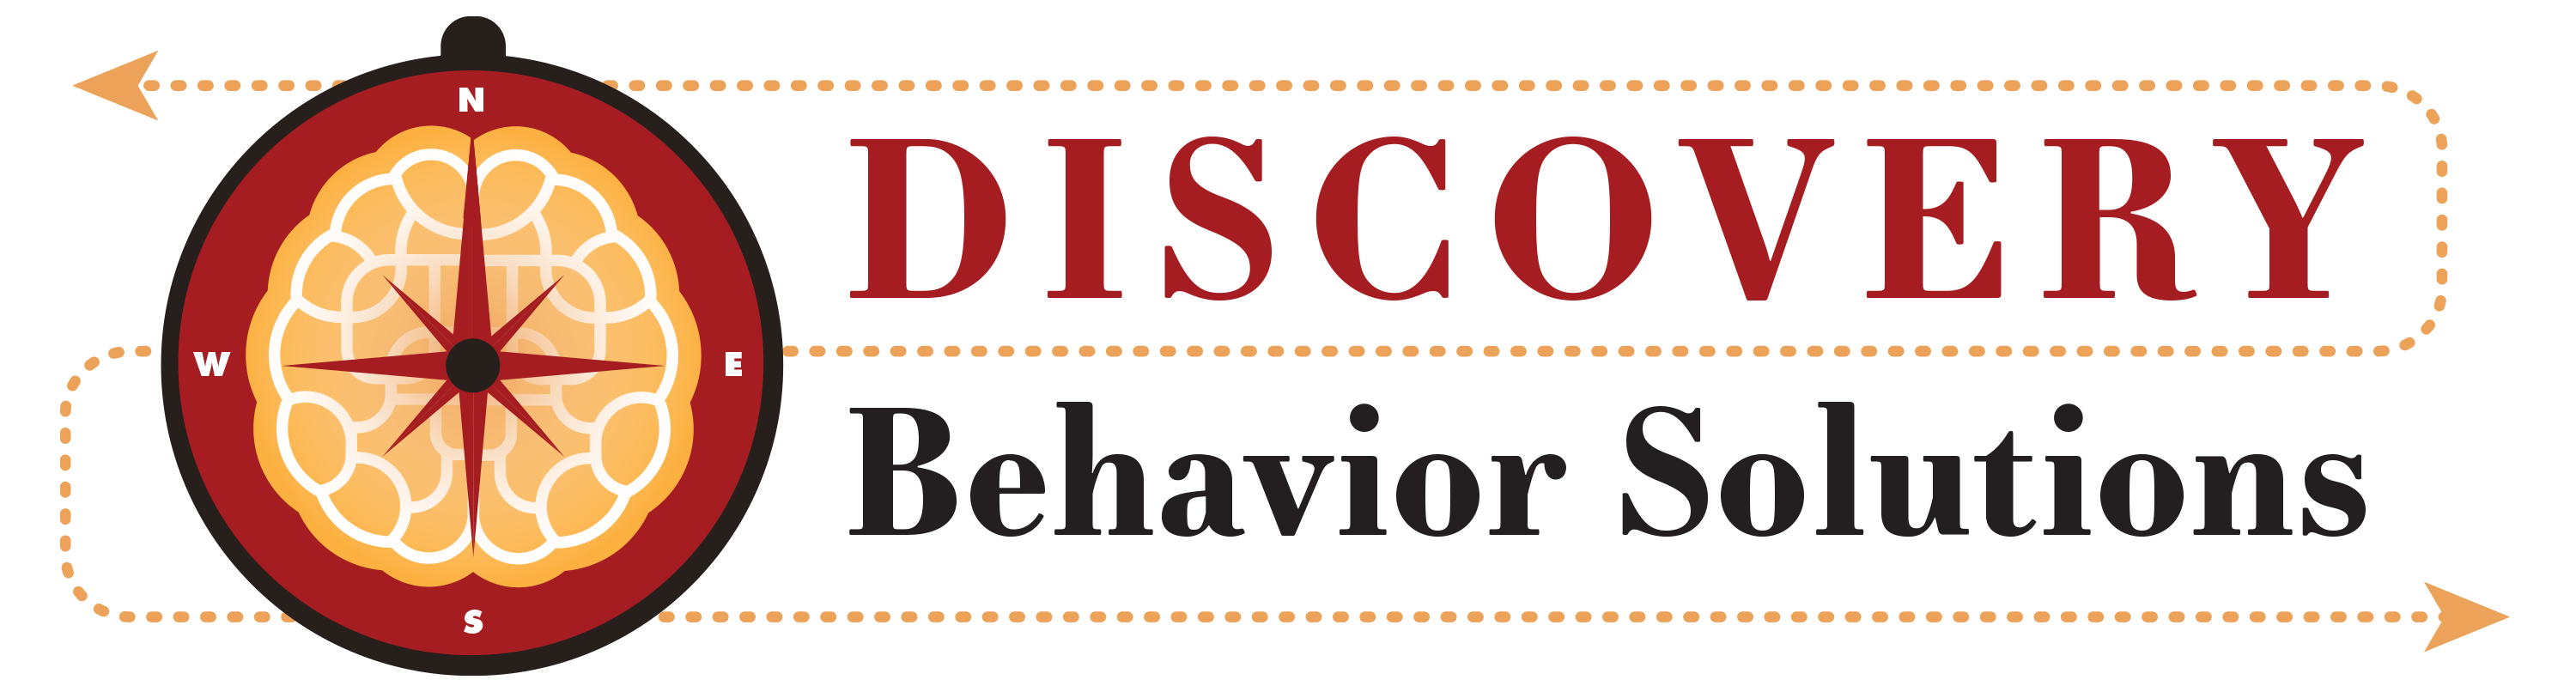 Discovery Behavior Solutions logo